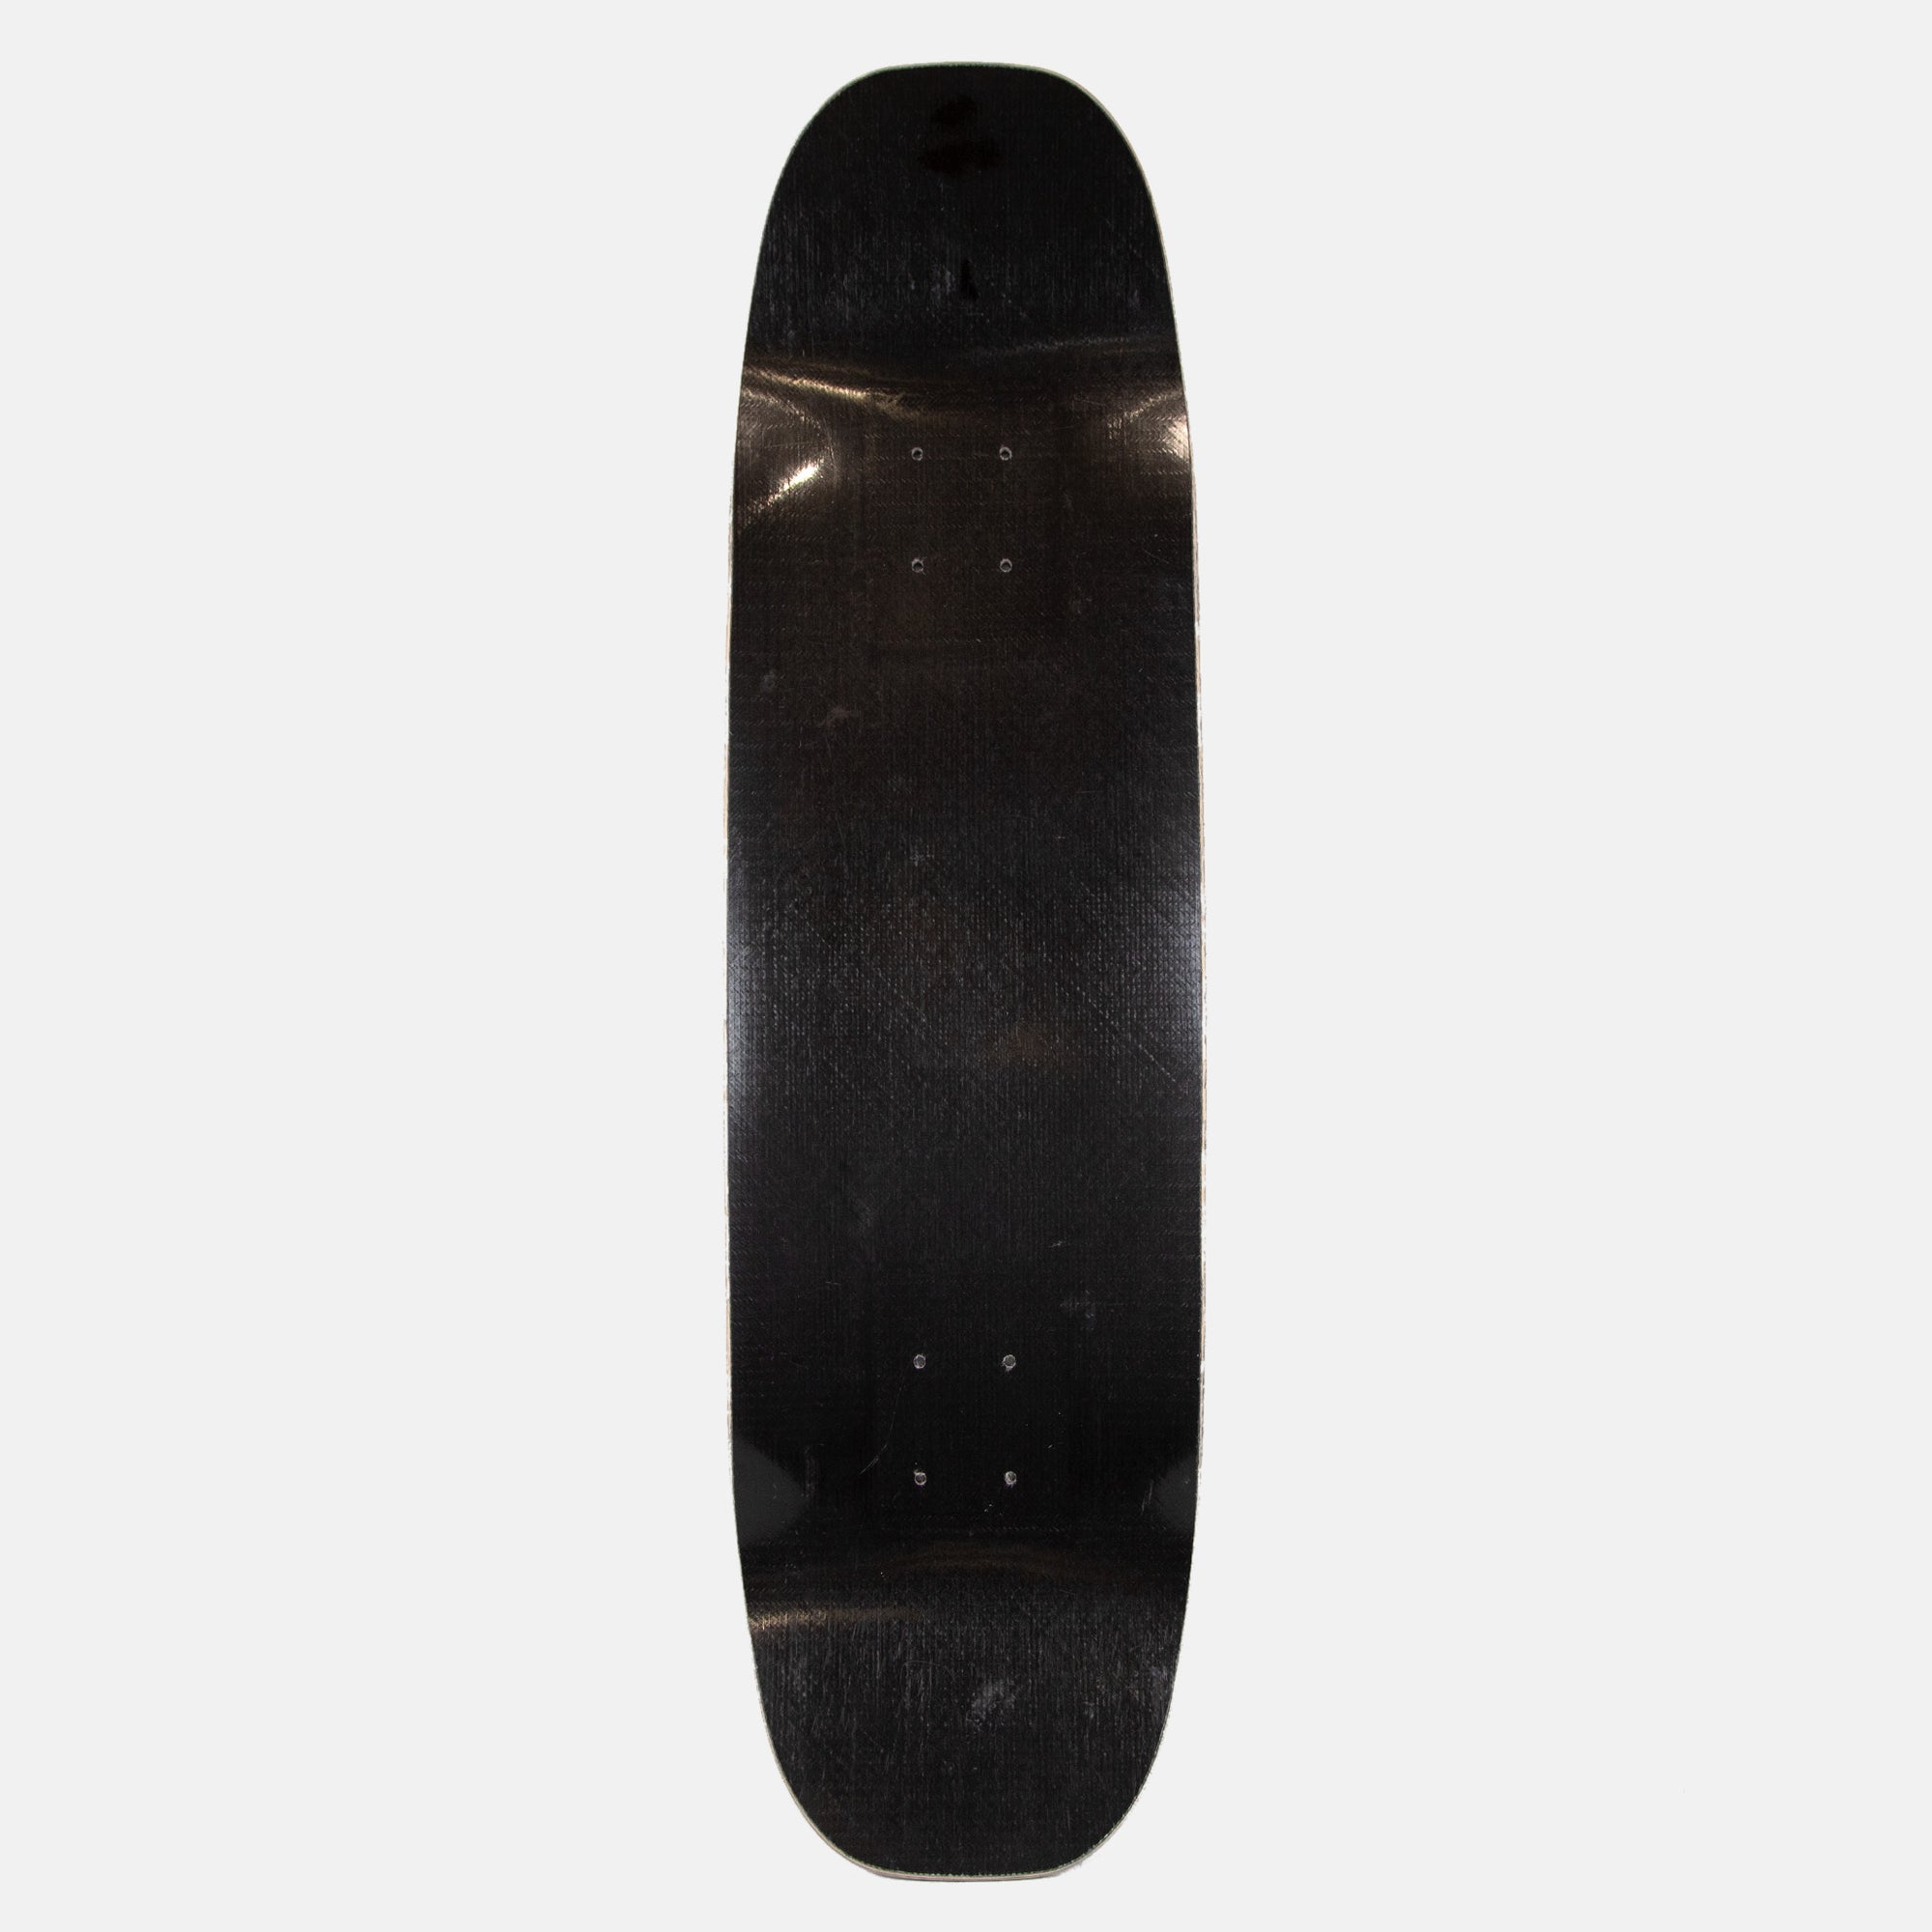 Powell Peralta - 8.7" Andy Anderson Heron Egg Skateboard Deck (Shape 301)